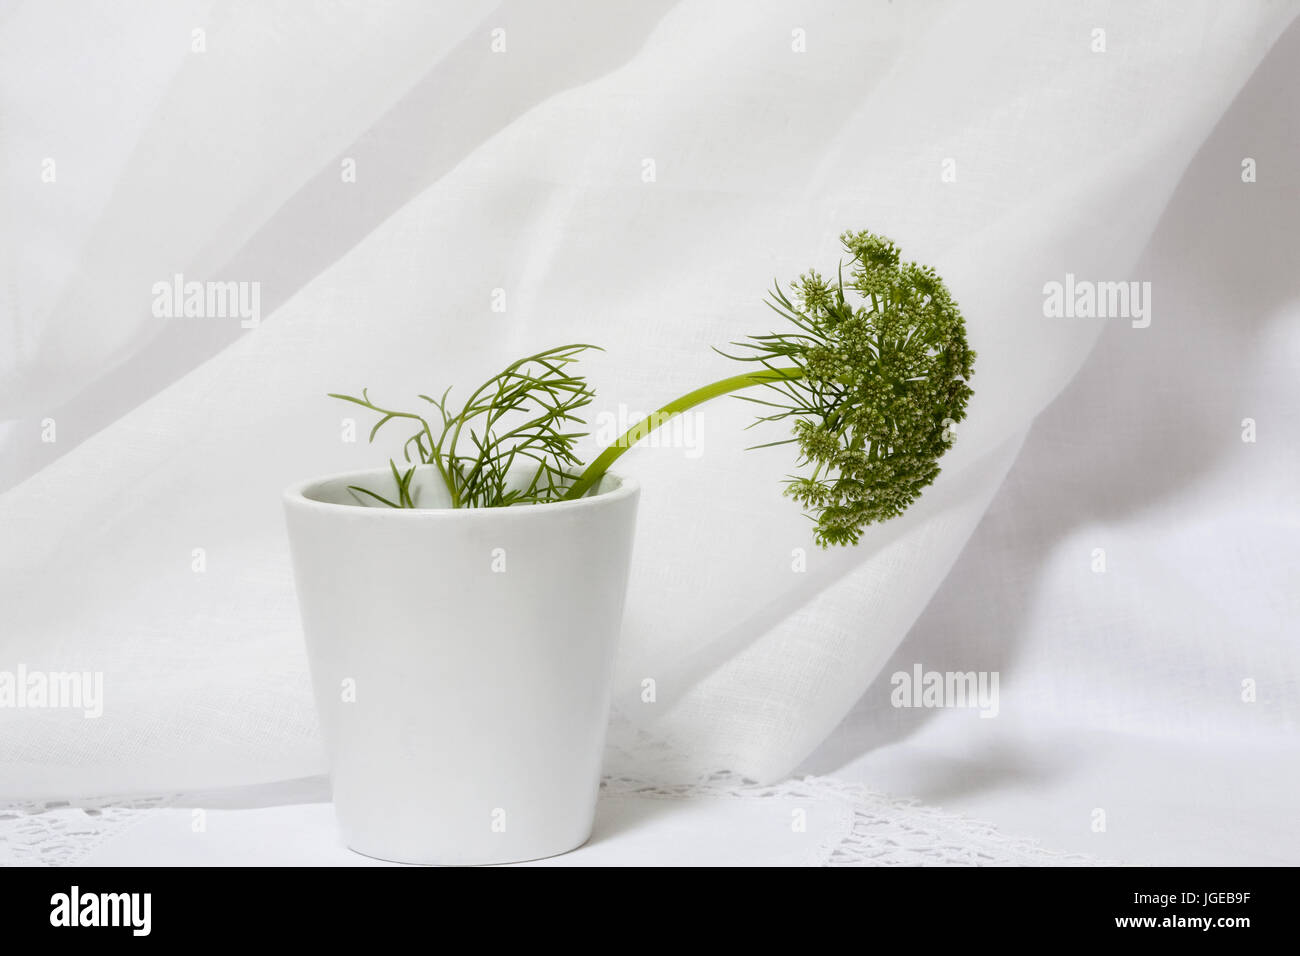 Minimal Still life - Dill flower in white pot.  Ammi majus in white pot on white fabric back ground. Stock Photo